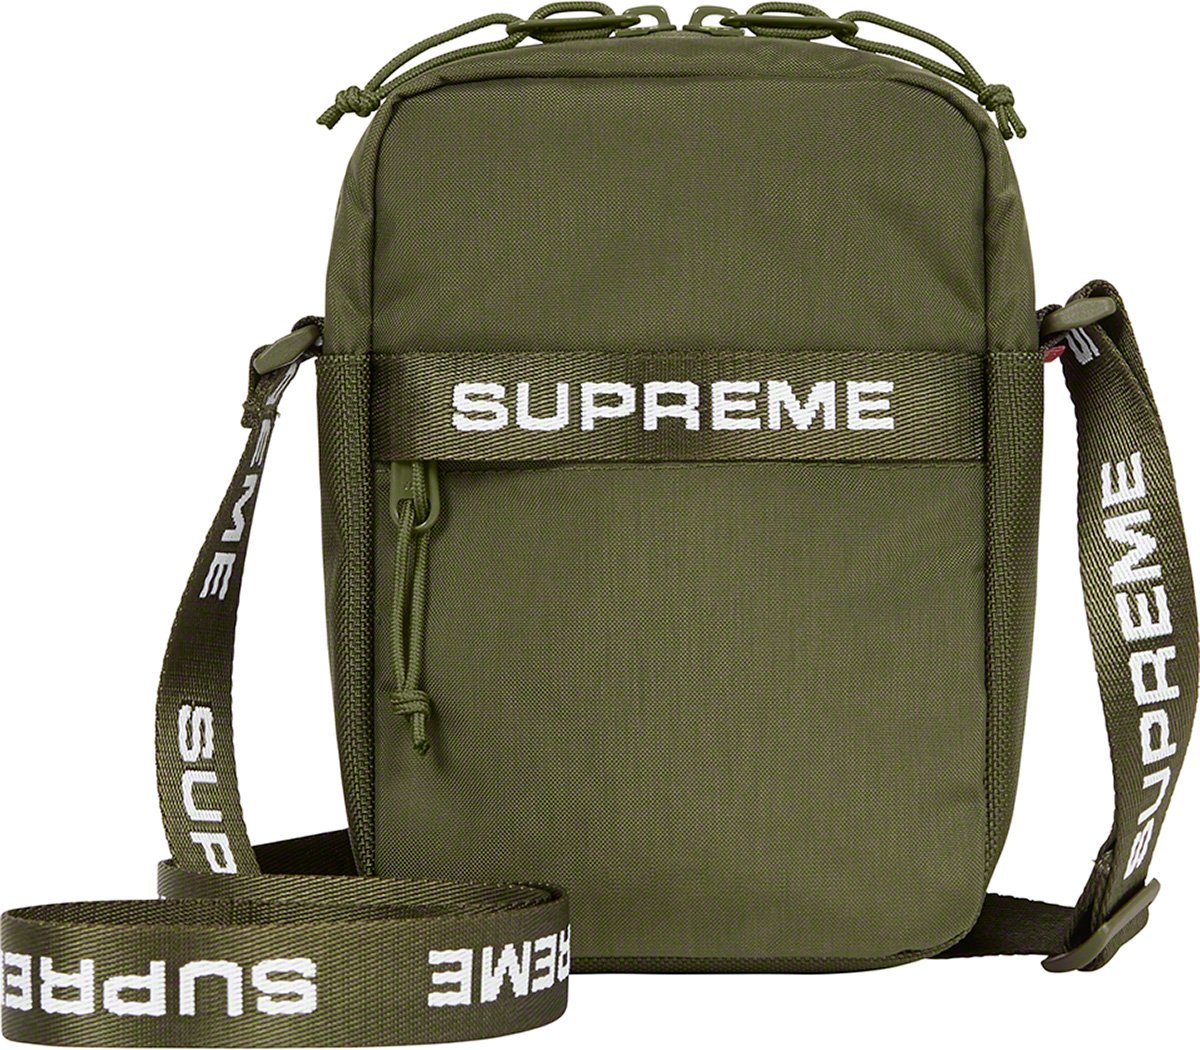 Supreme Shoulder Bag FW22 “Red” (100% AUTHENTIC)!